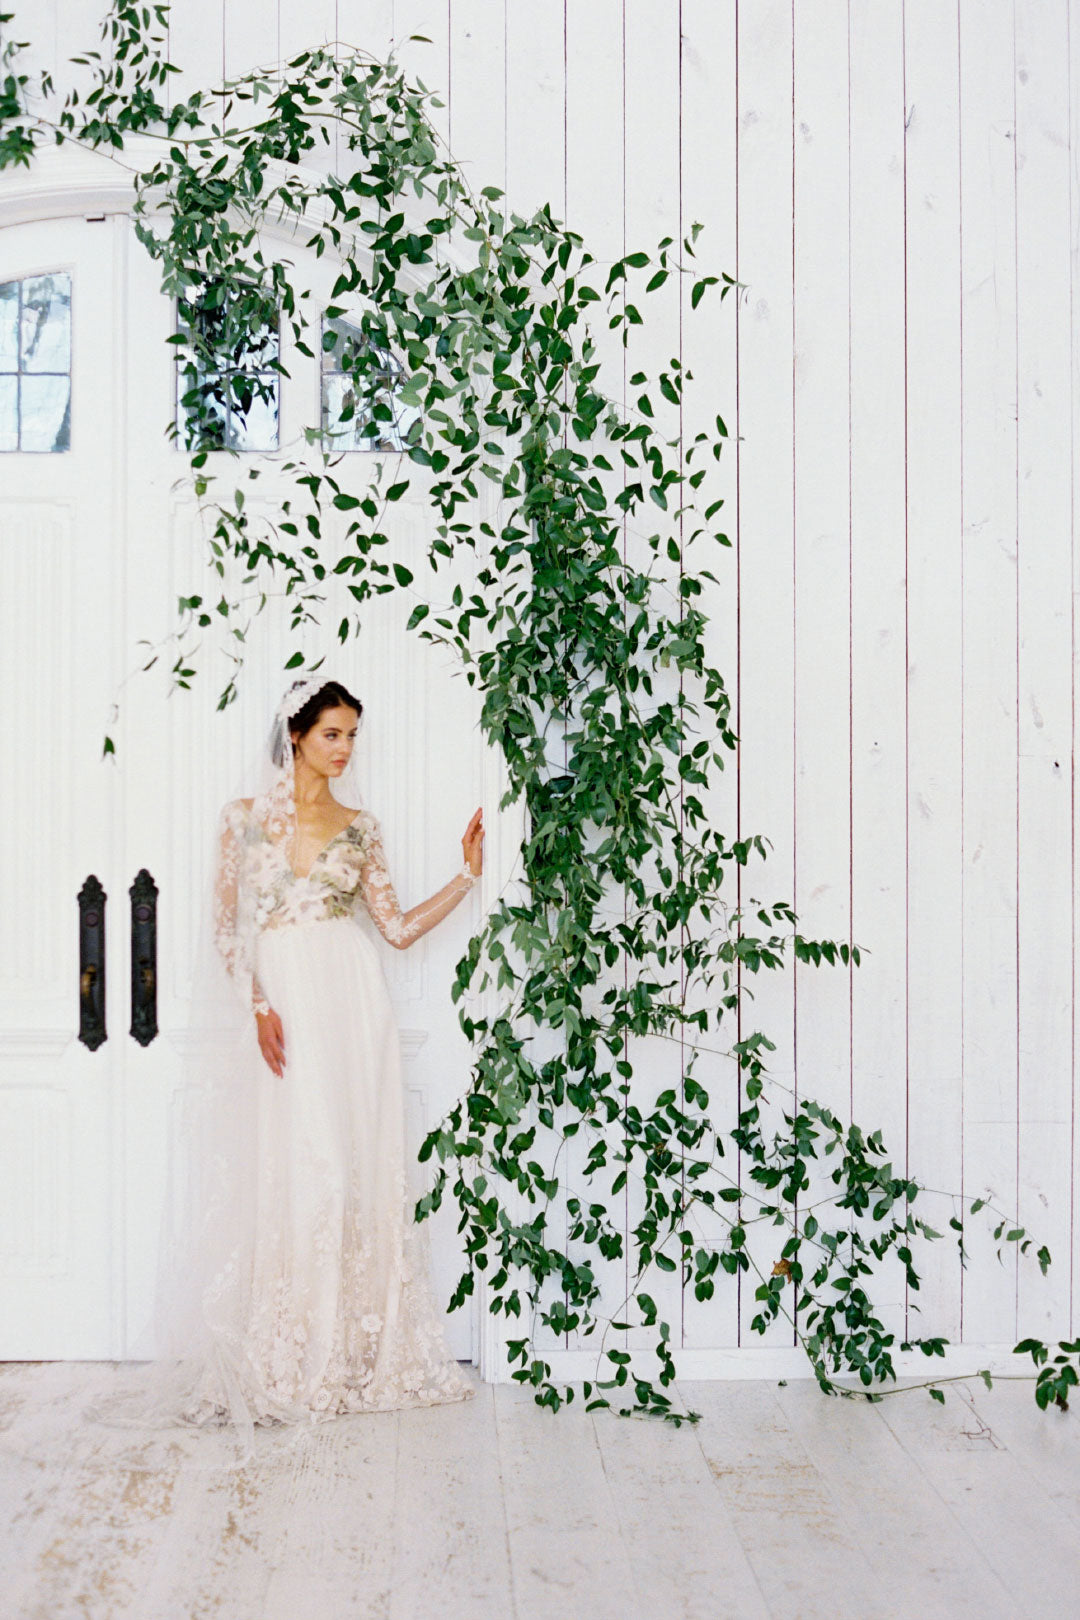 Bride near floral arch